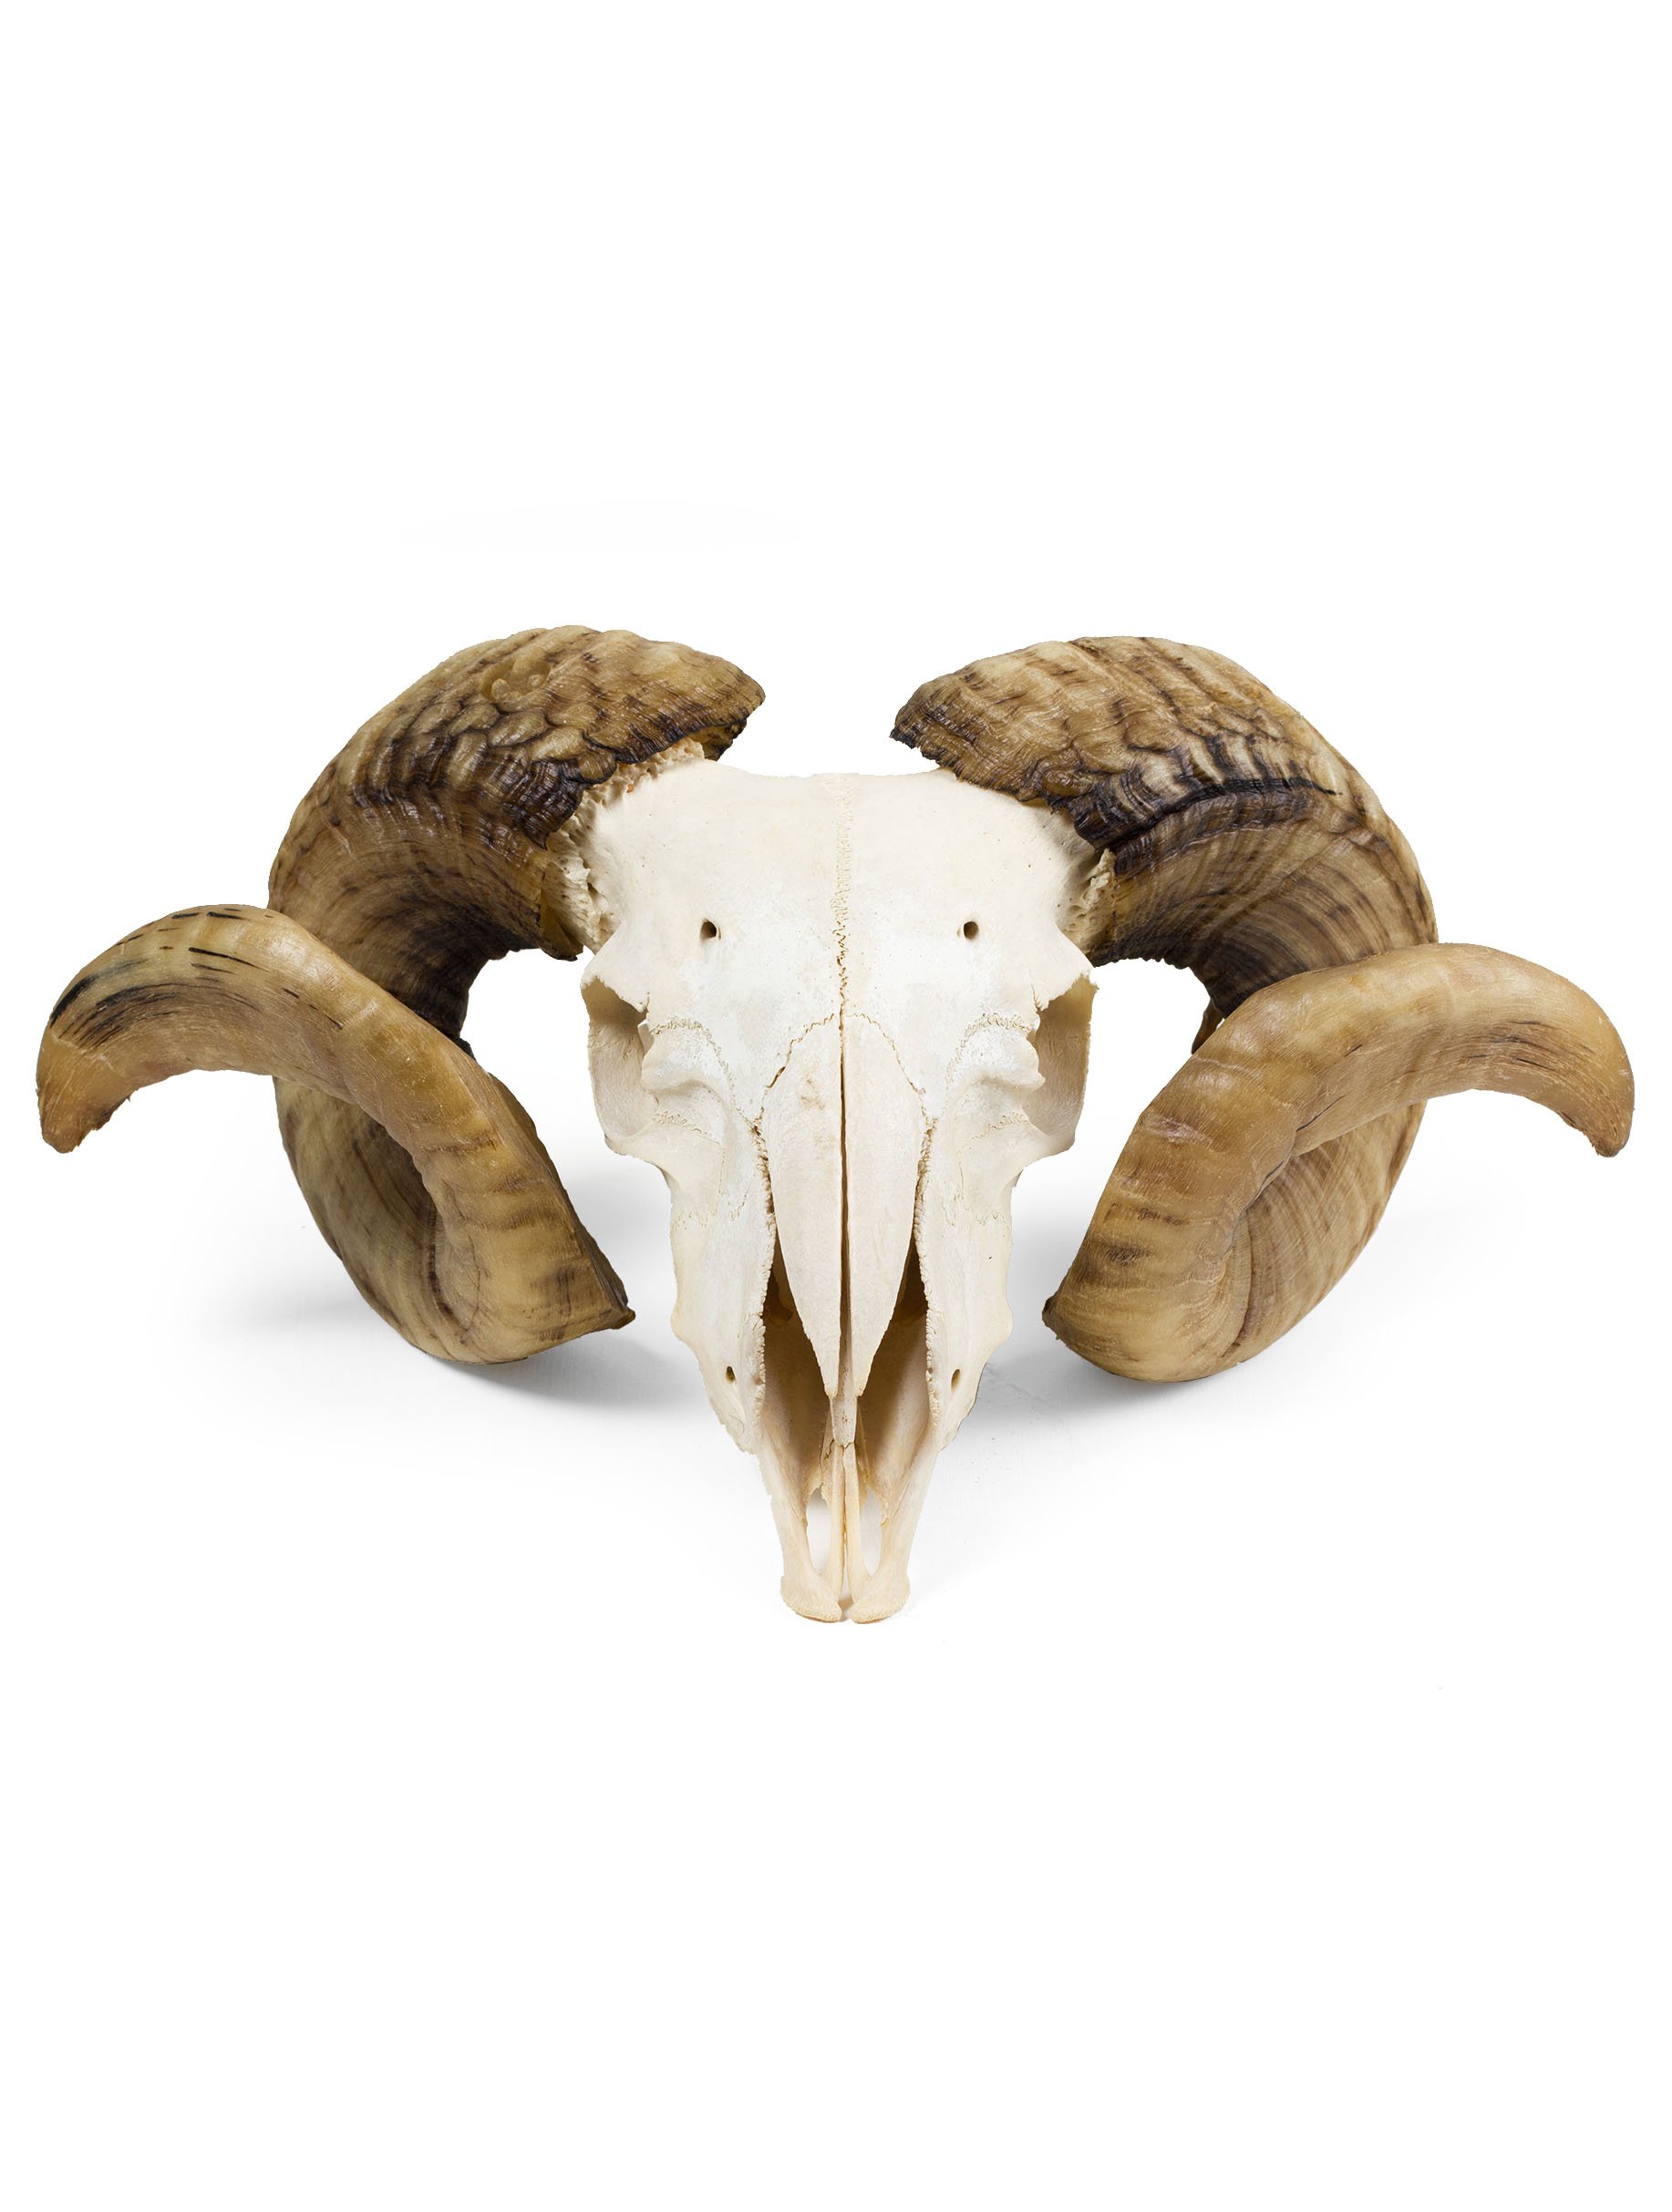 Domestic Ram Skull - (Ovis aries) | The Weird & Wonderful